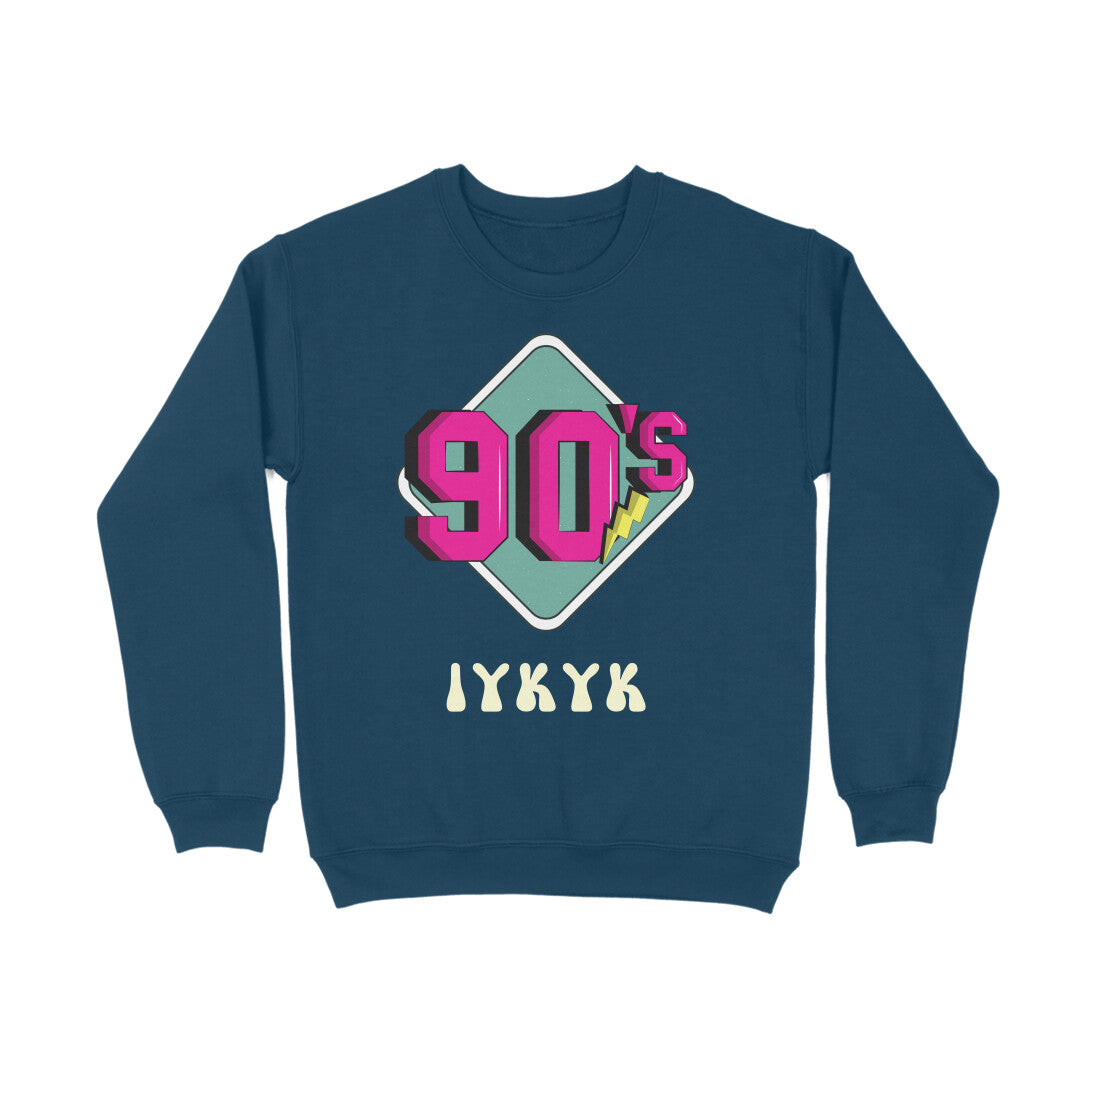 Bilkool 90s IYKYK Cotton Sweatshirt